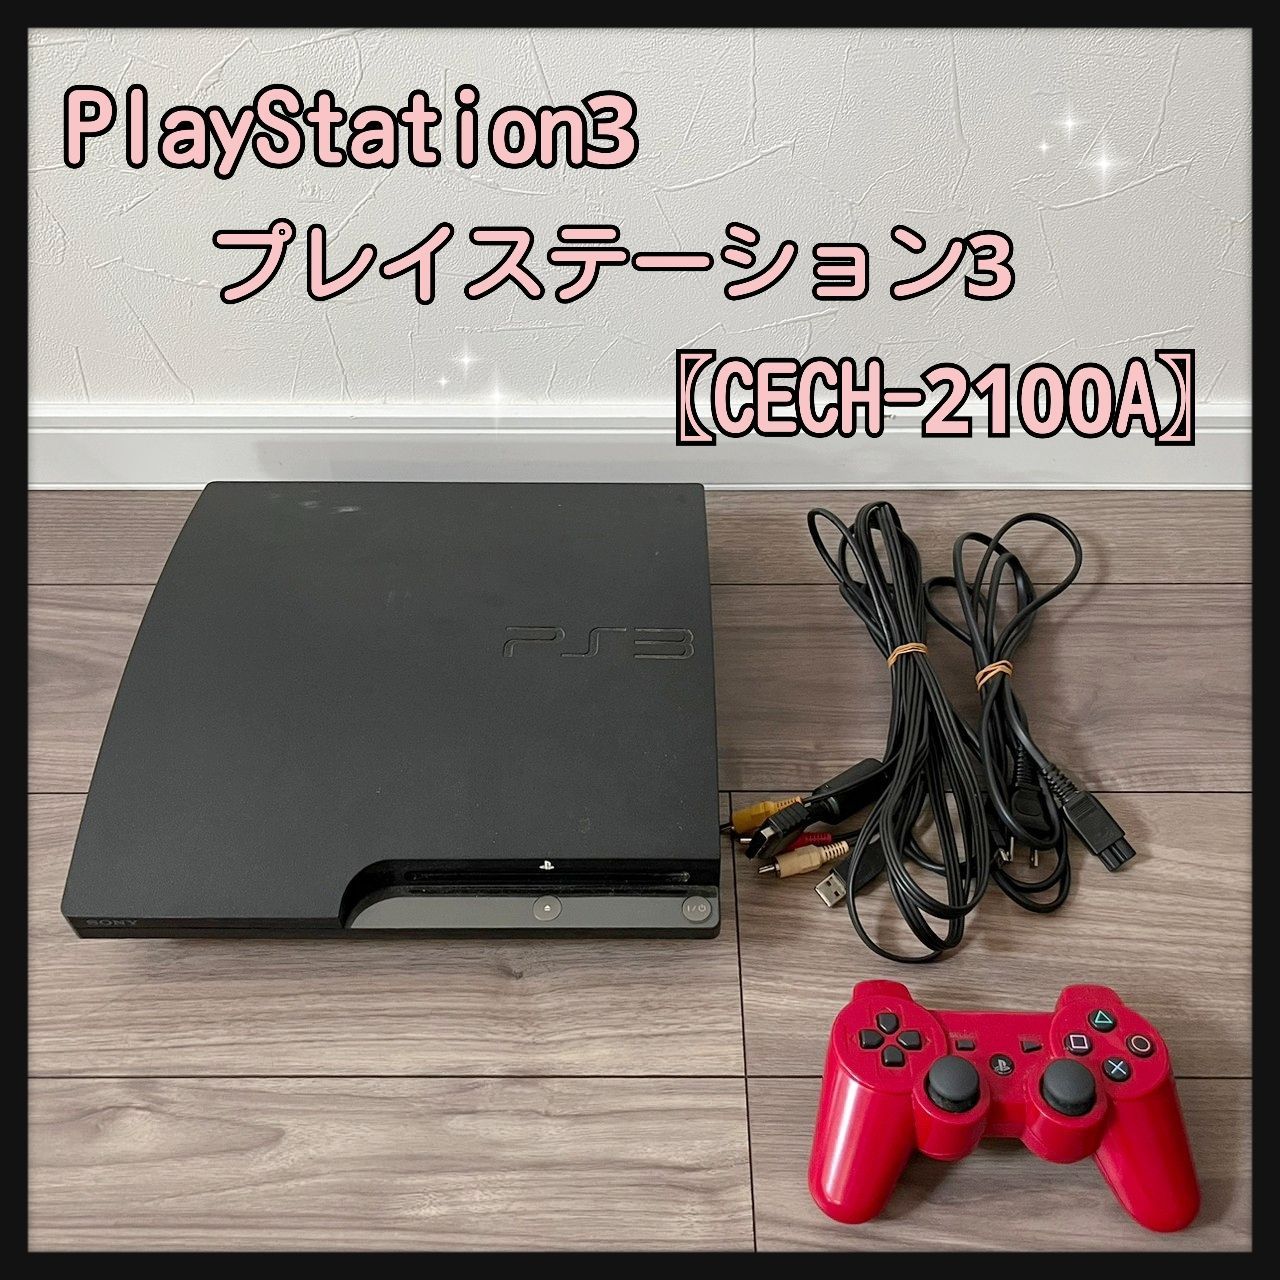 PlayStation3 プレイステーション3 CECH-2100A - hareiro【ハレイロ